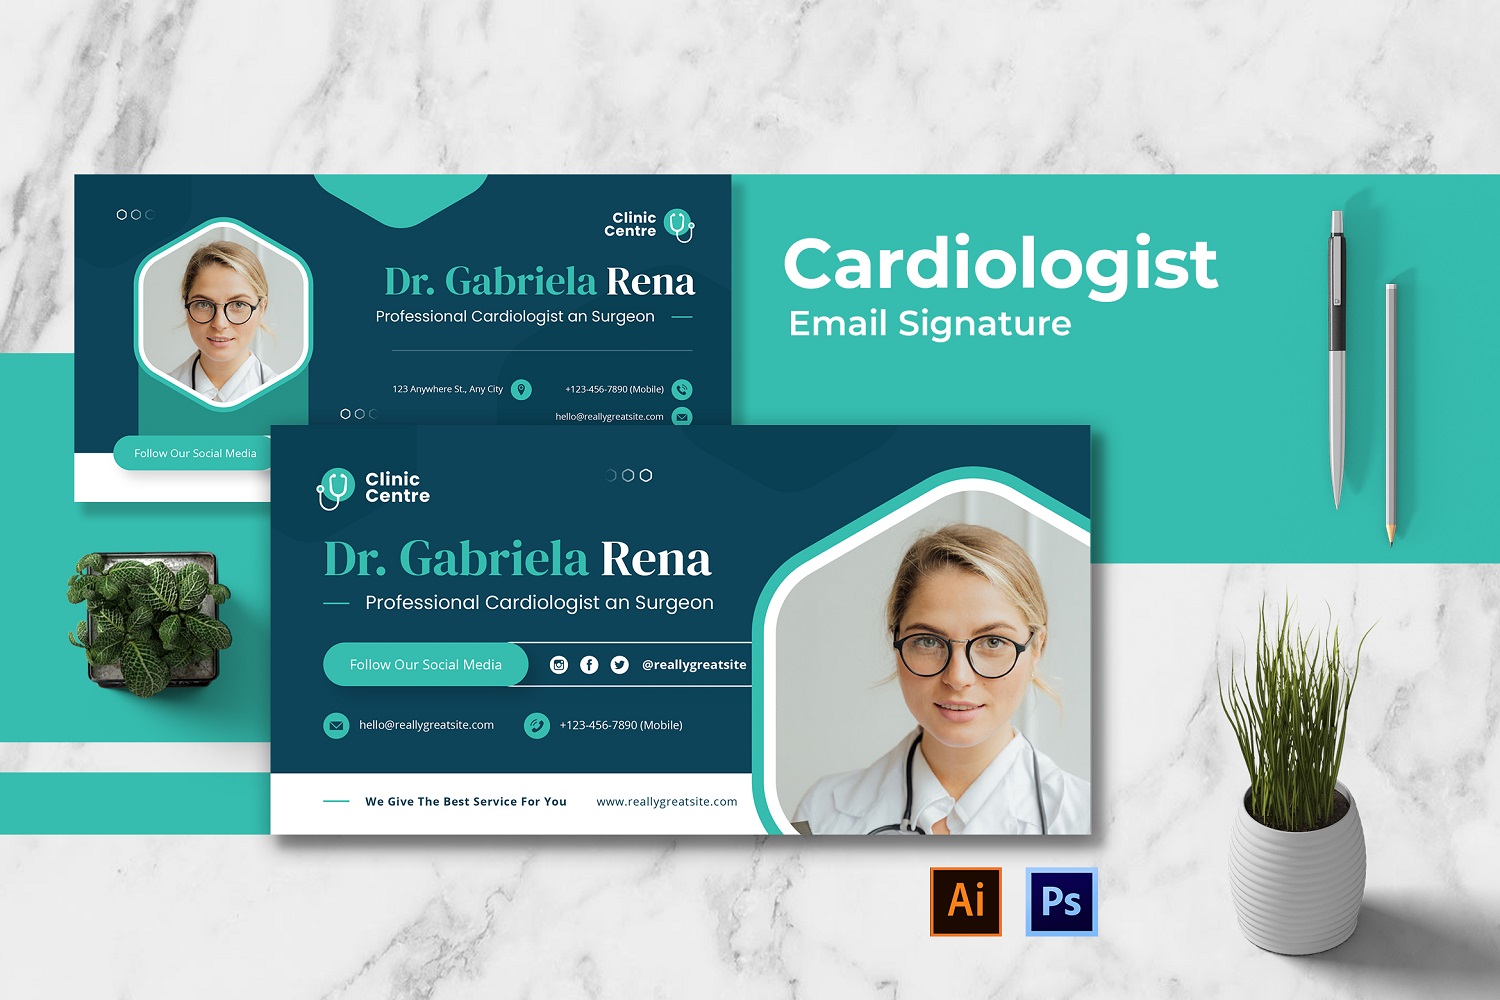 Professional Cardiologist Email Signature